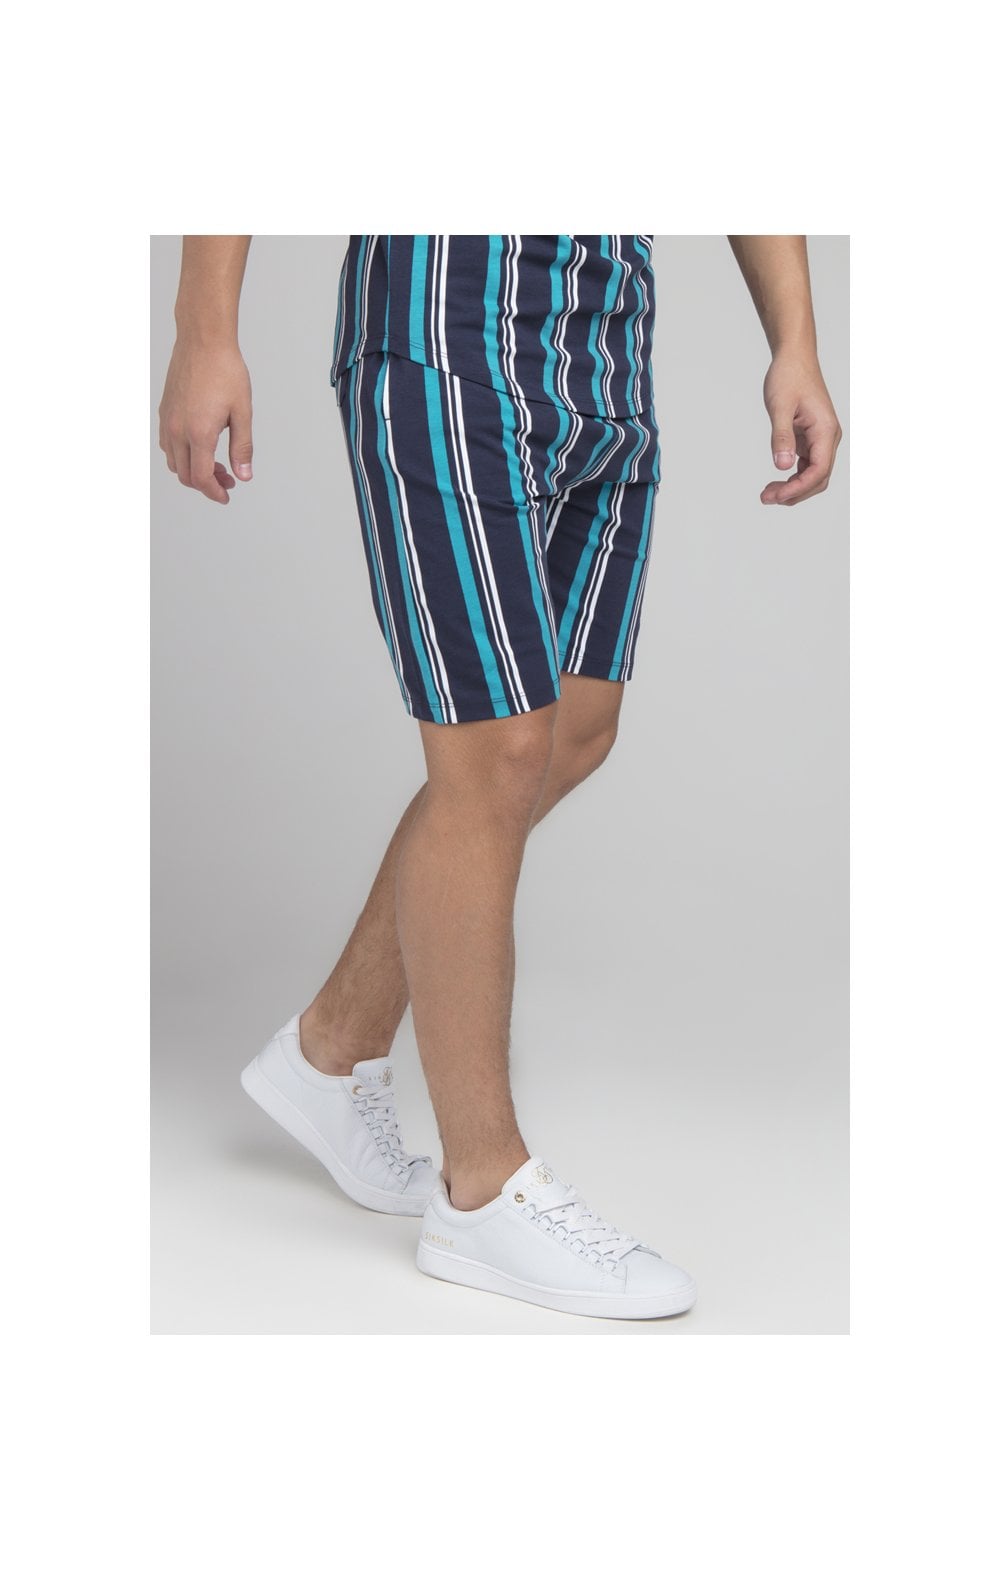 Illusive London Stripe Shorts - Navy & Teal (1)